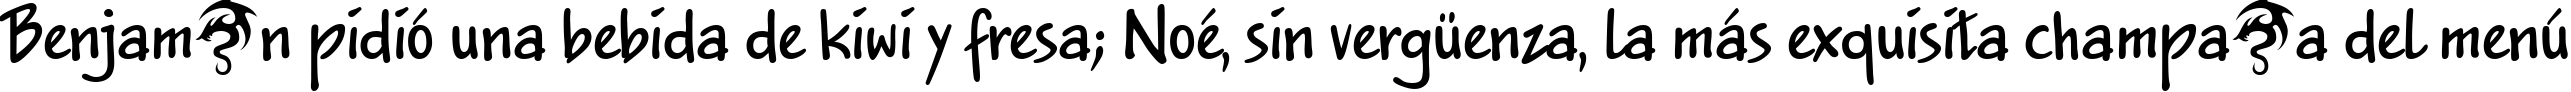 Пример написания шрифтом Jakob DP Normal текста на испанском